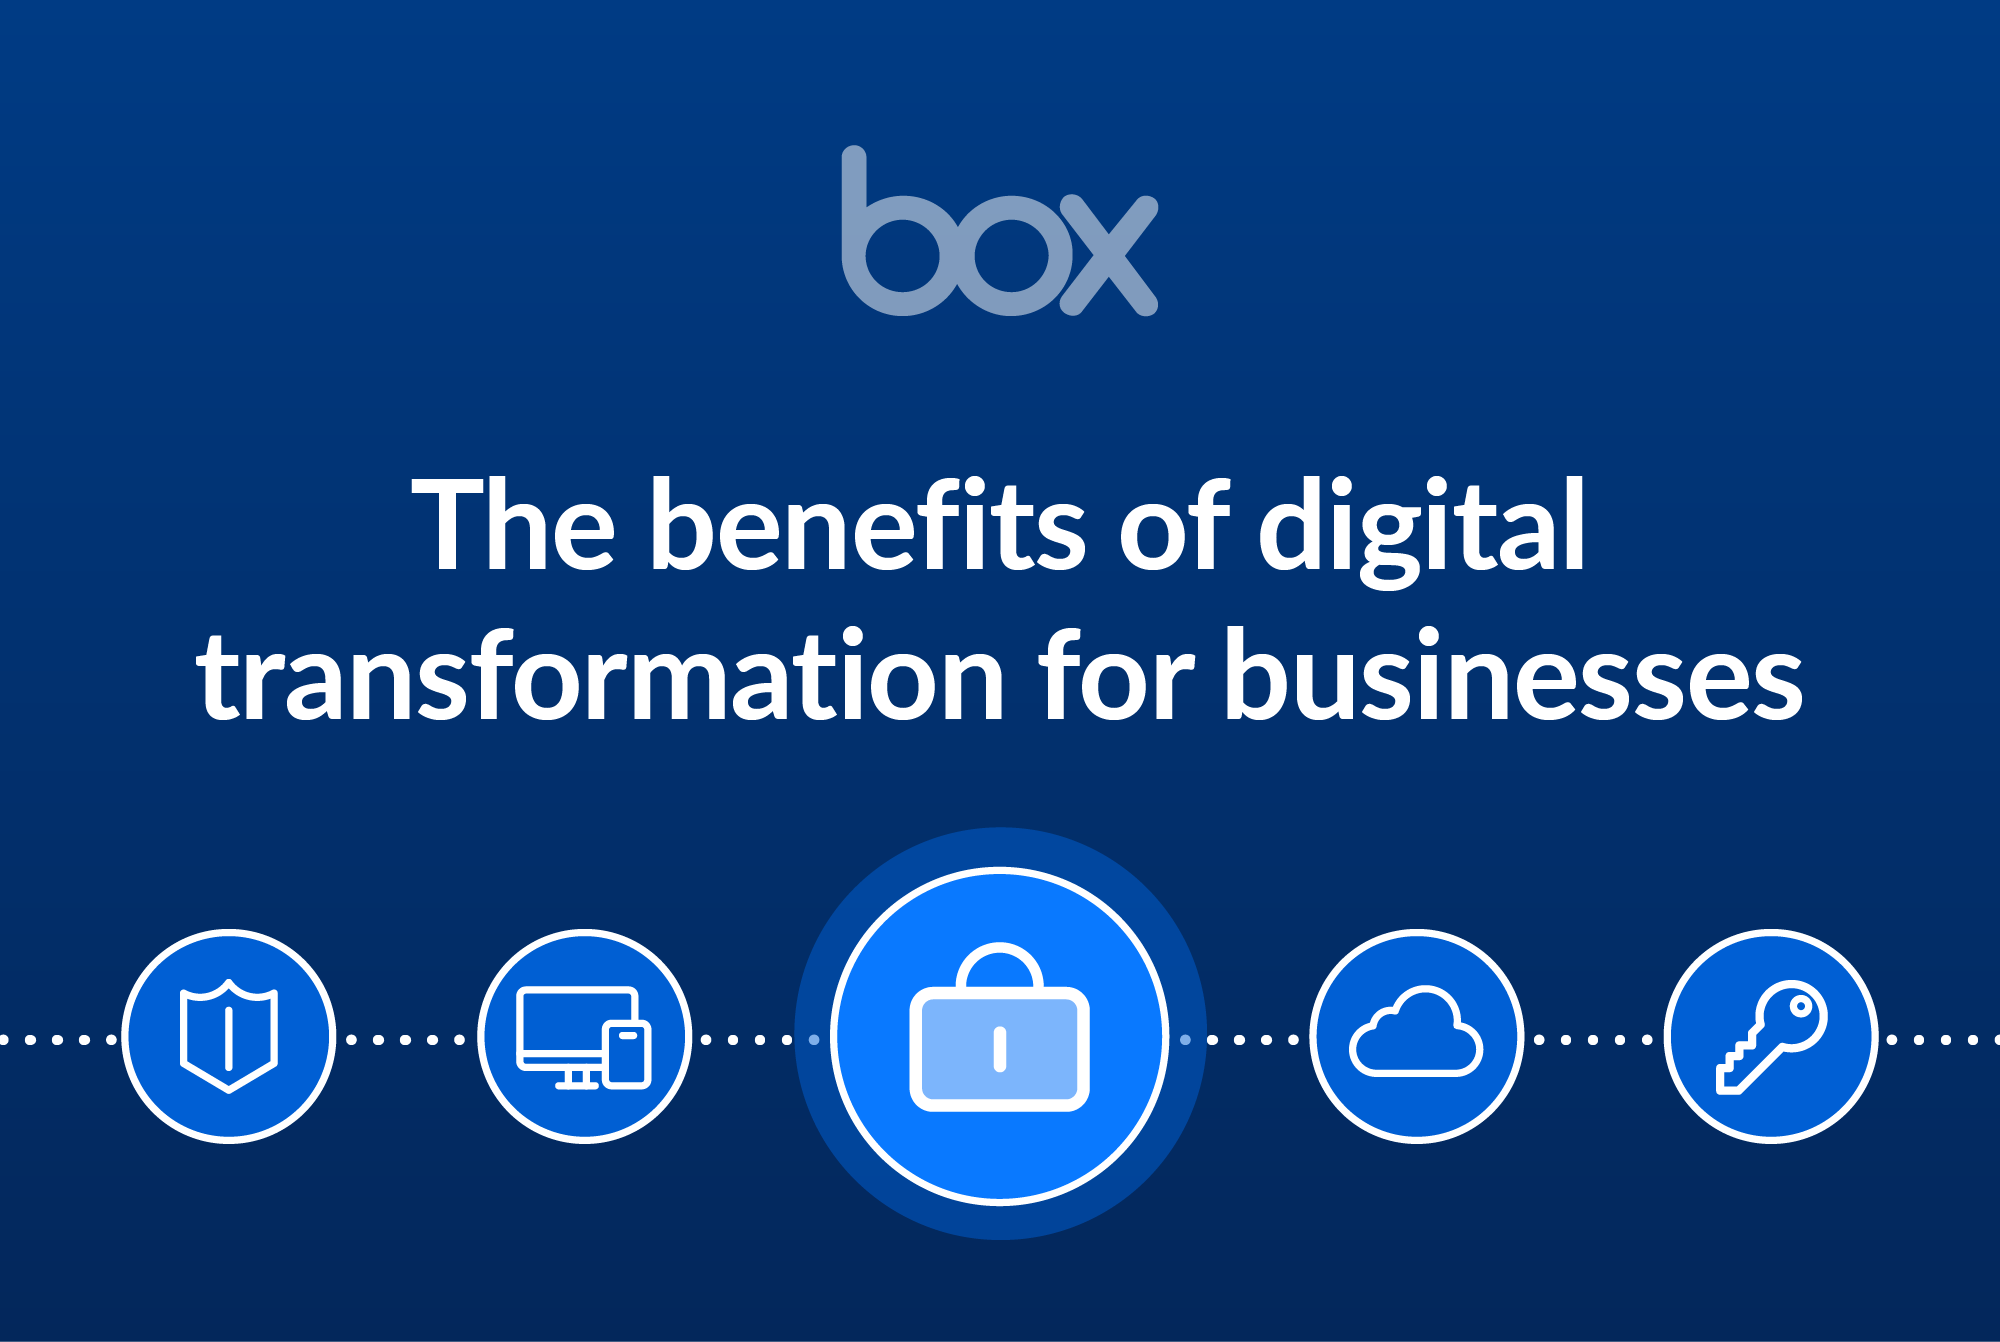 Box: Secure, Digital Organization Platform